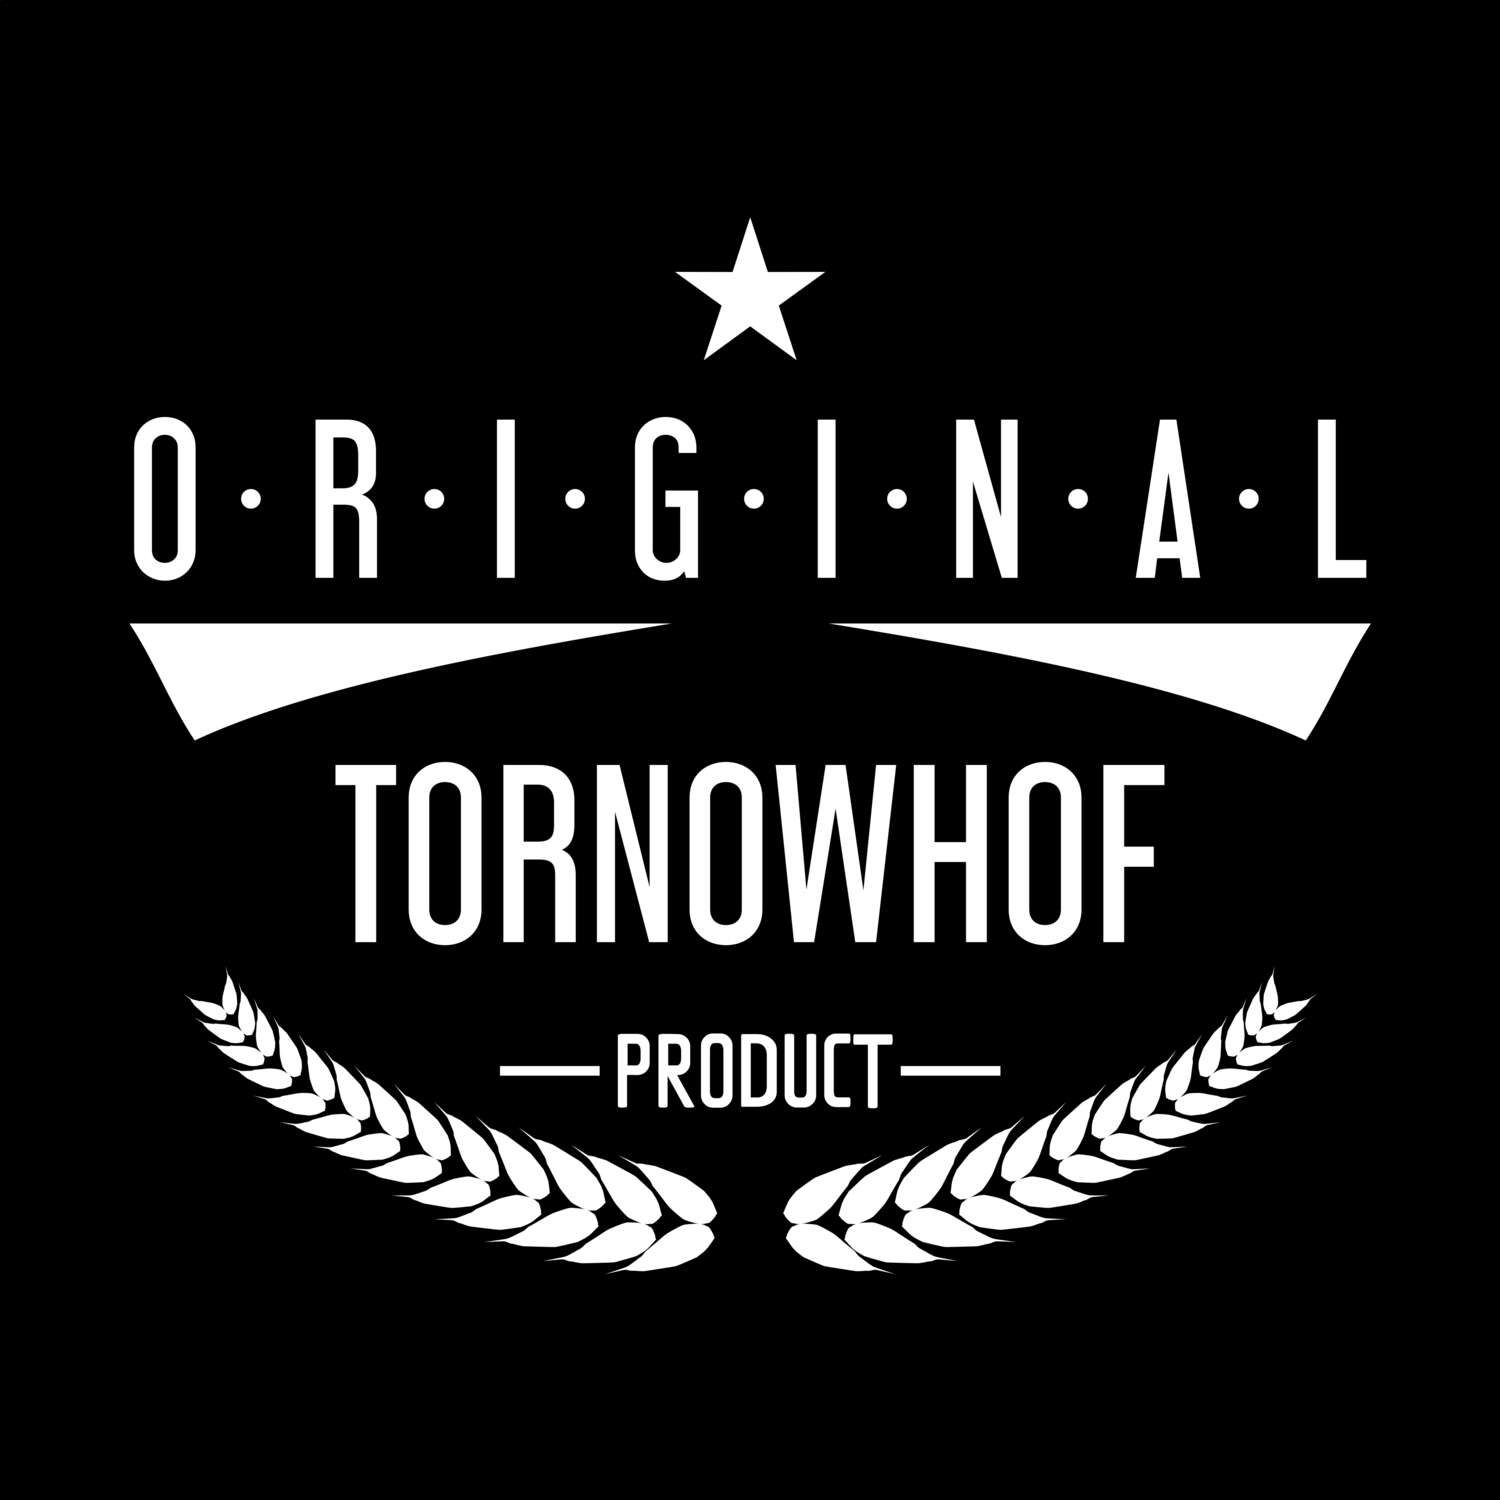 Tornowhof T-Shirt »Original Product«